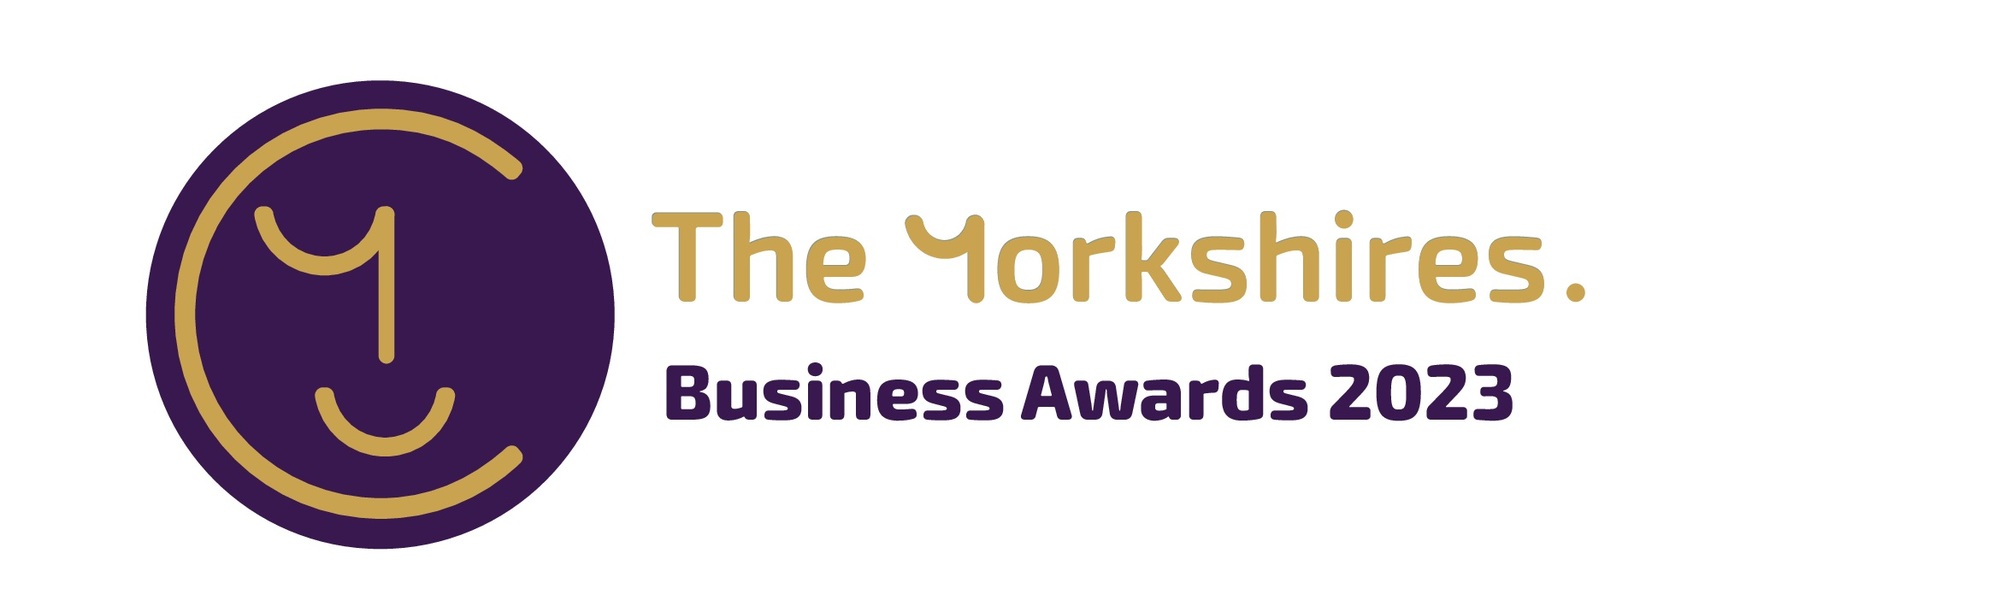 The Yorkshires. Business Awards 2023 logo